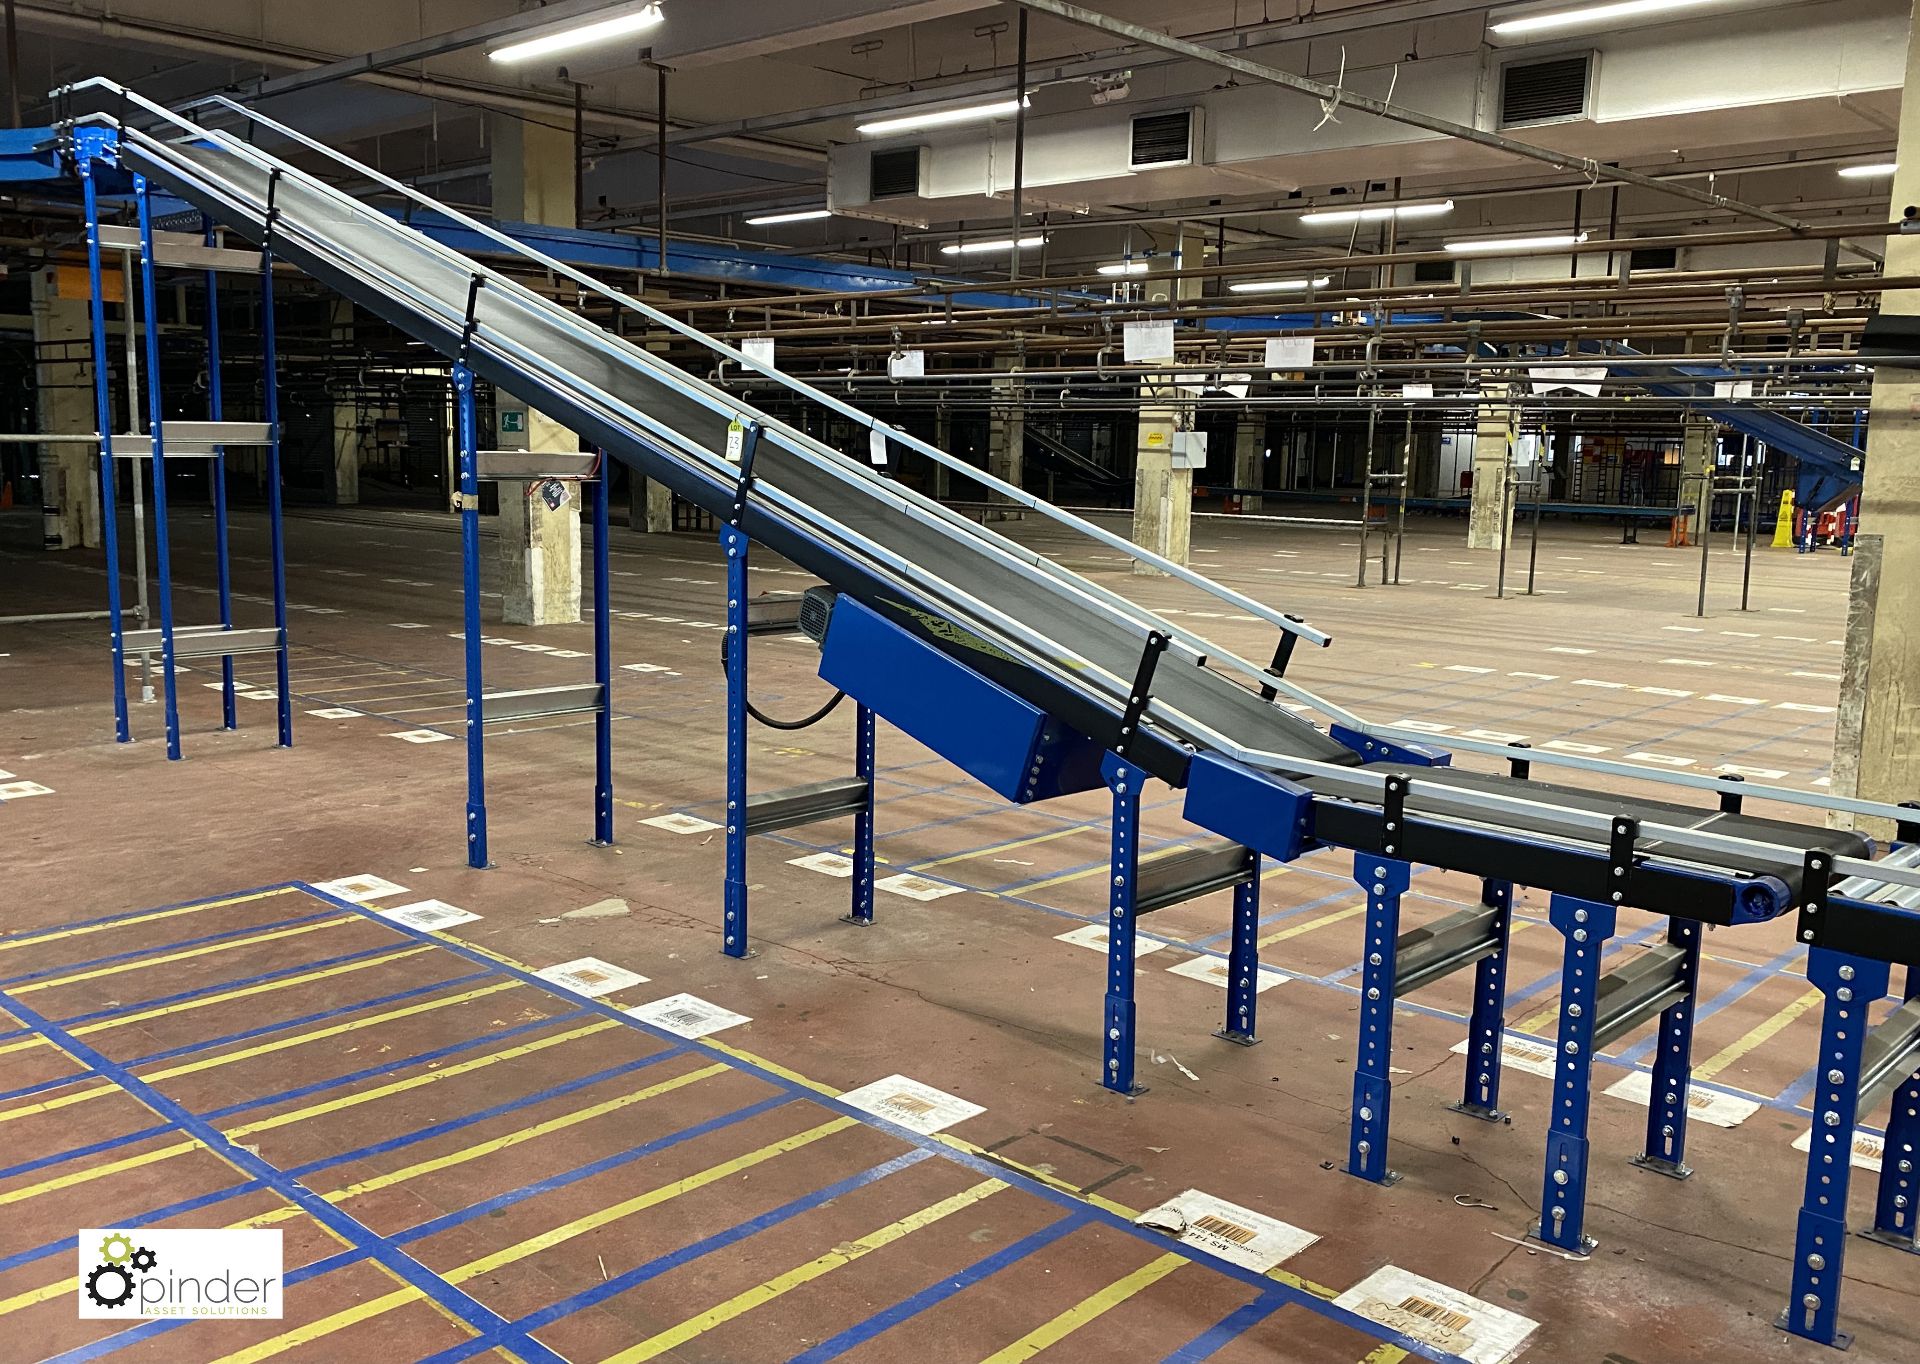 Powered inclined Belt Conveyor, 7.7m long, 2.7m high, 450mm belt width, recently installed (on